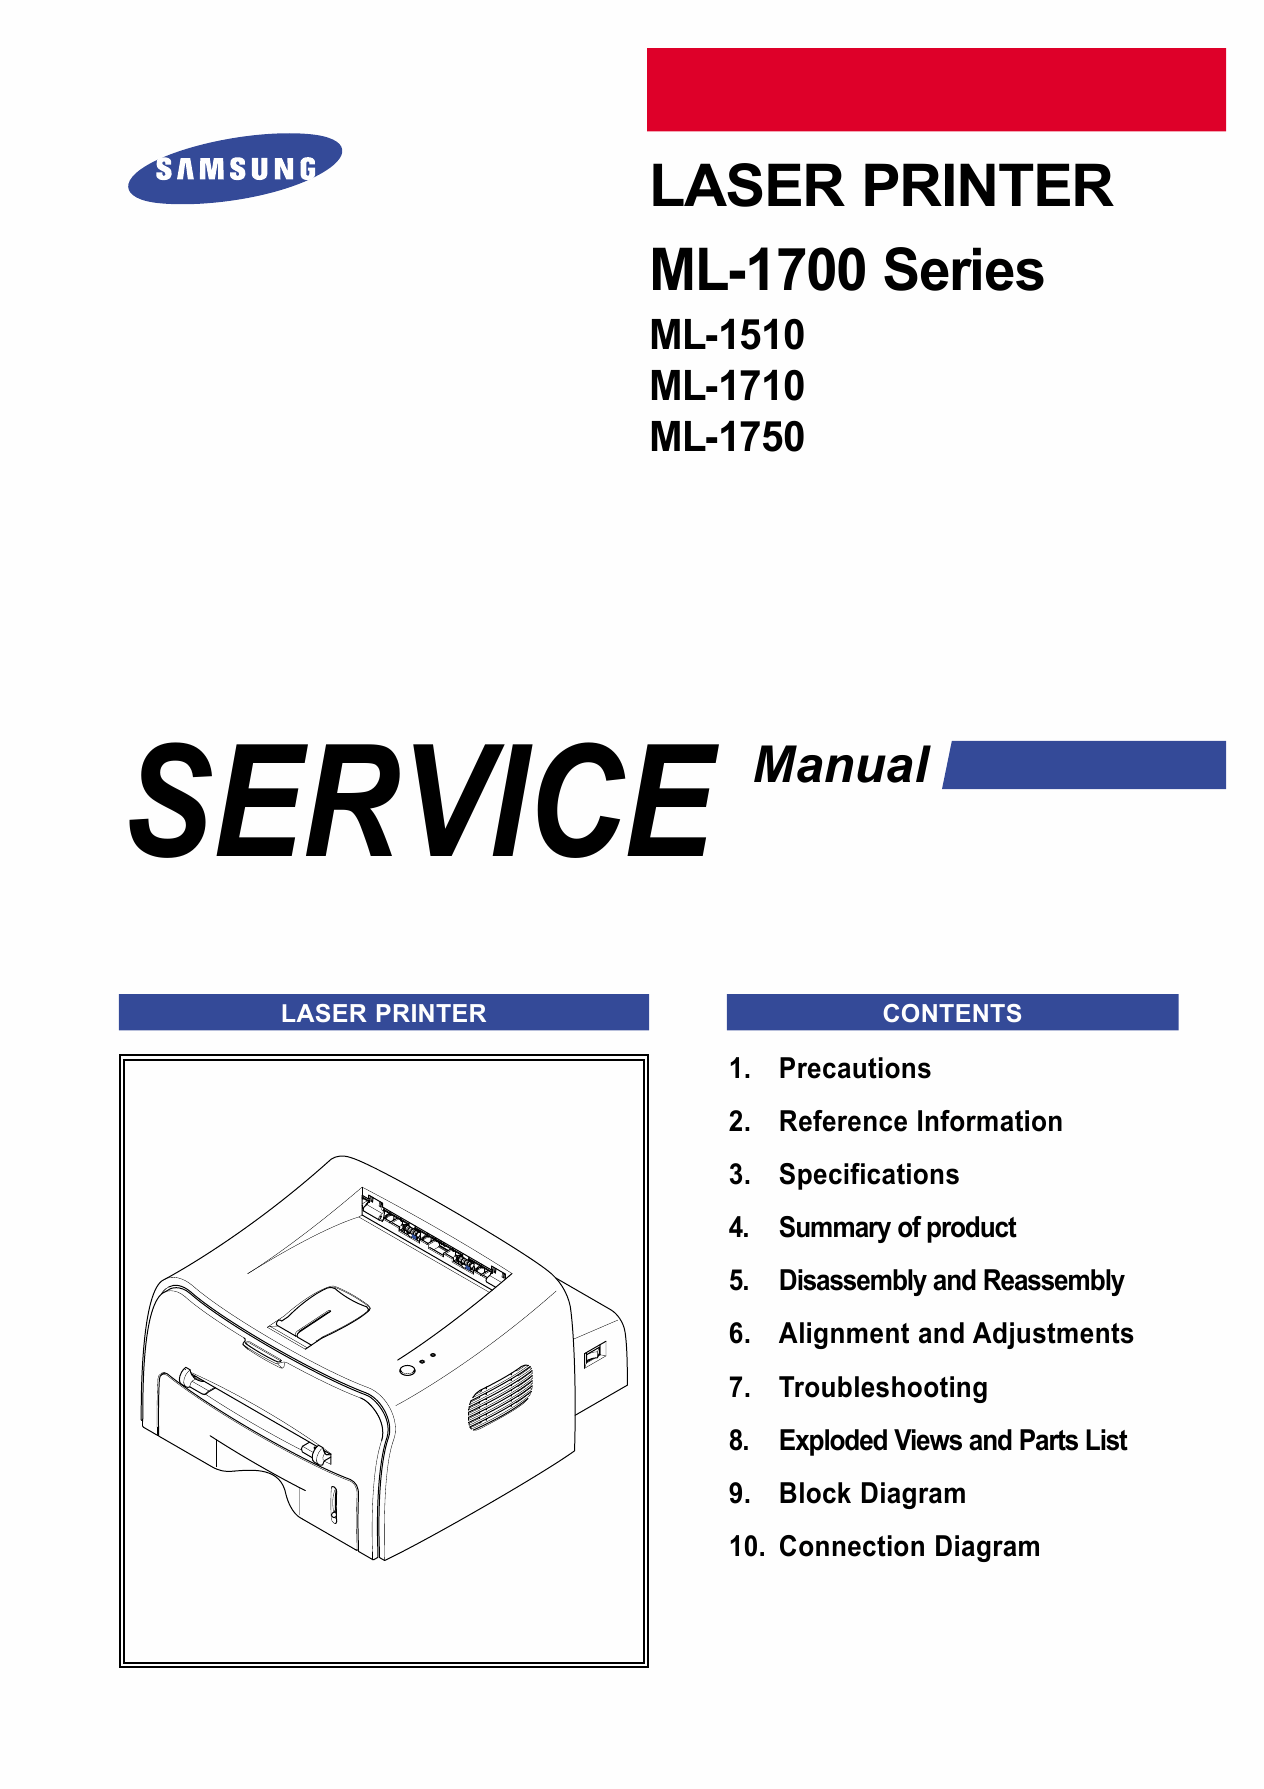 Samsung Laser-Printer ML-1750 1710 1700 1510 Parts and Service Manual-1